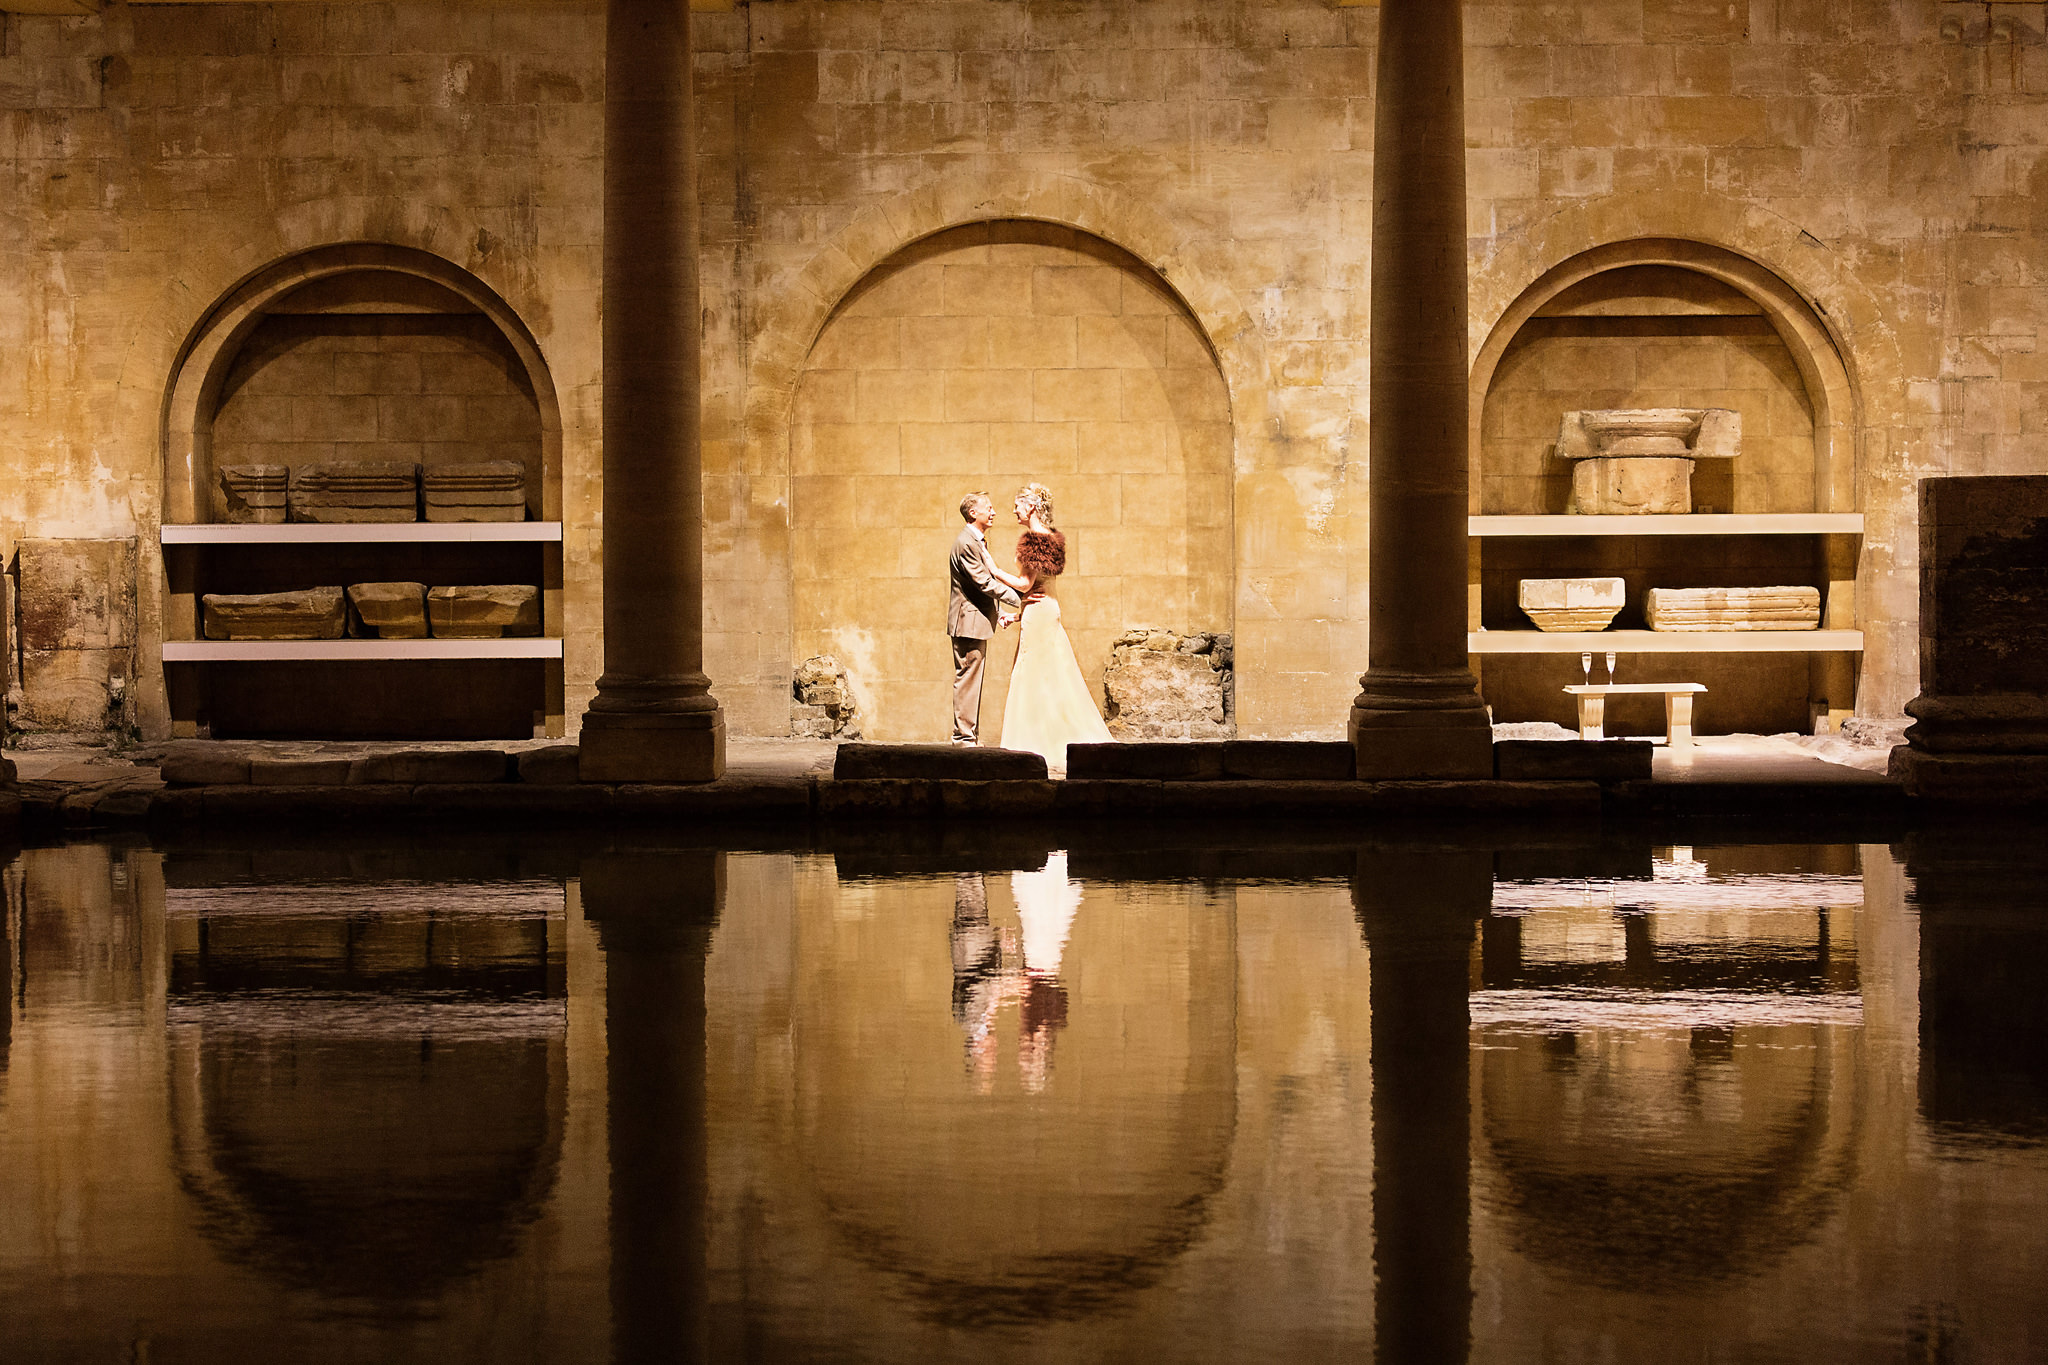 Roman Baths for wedding photography